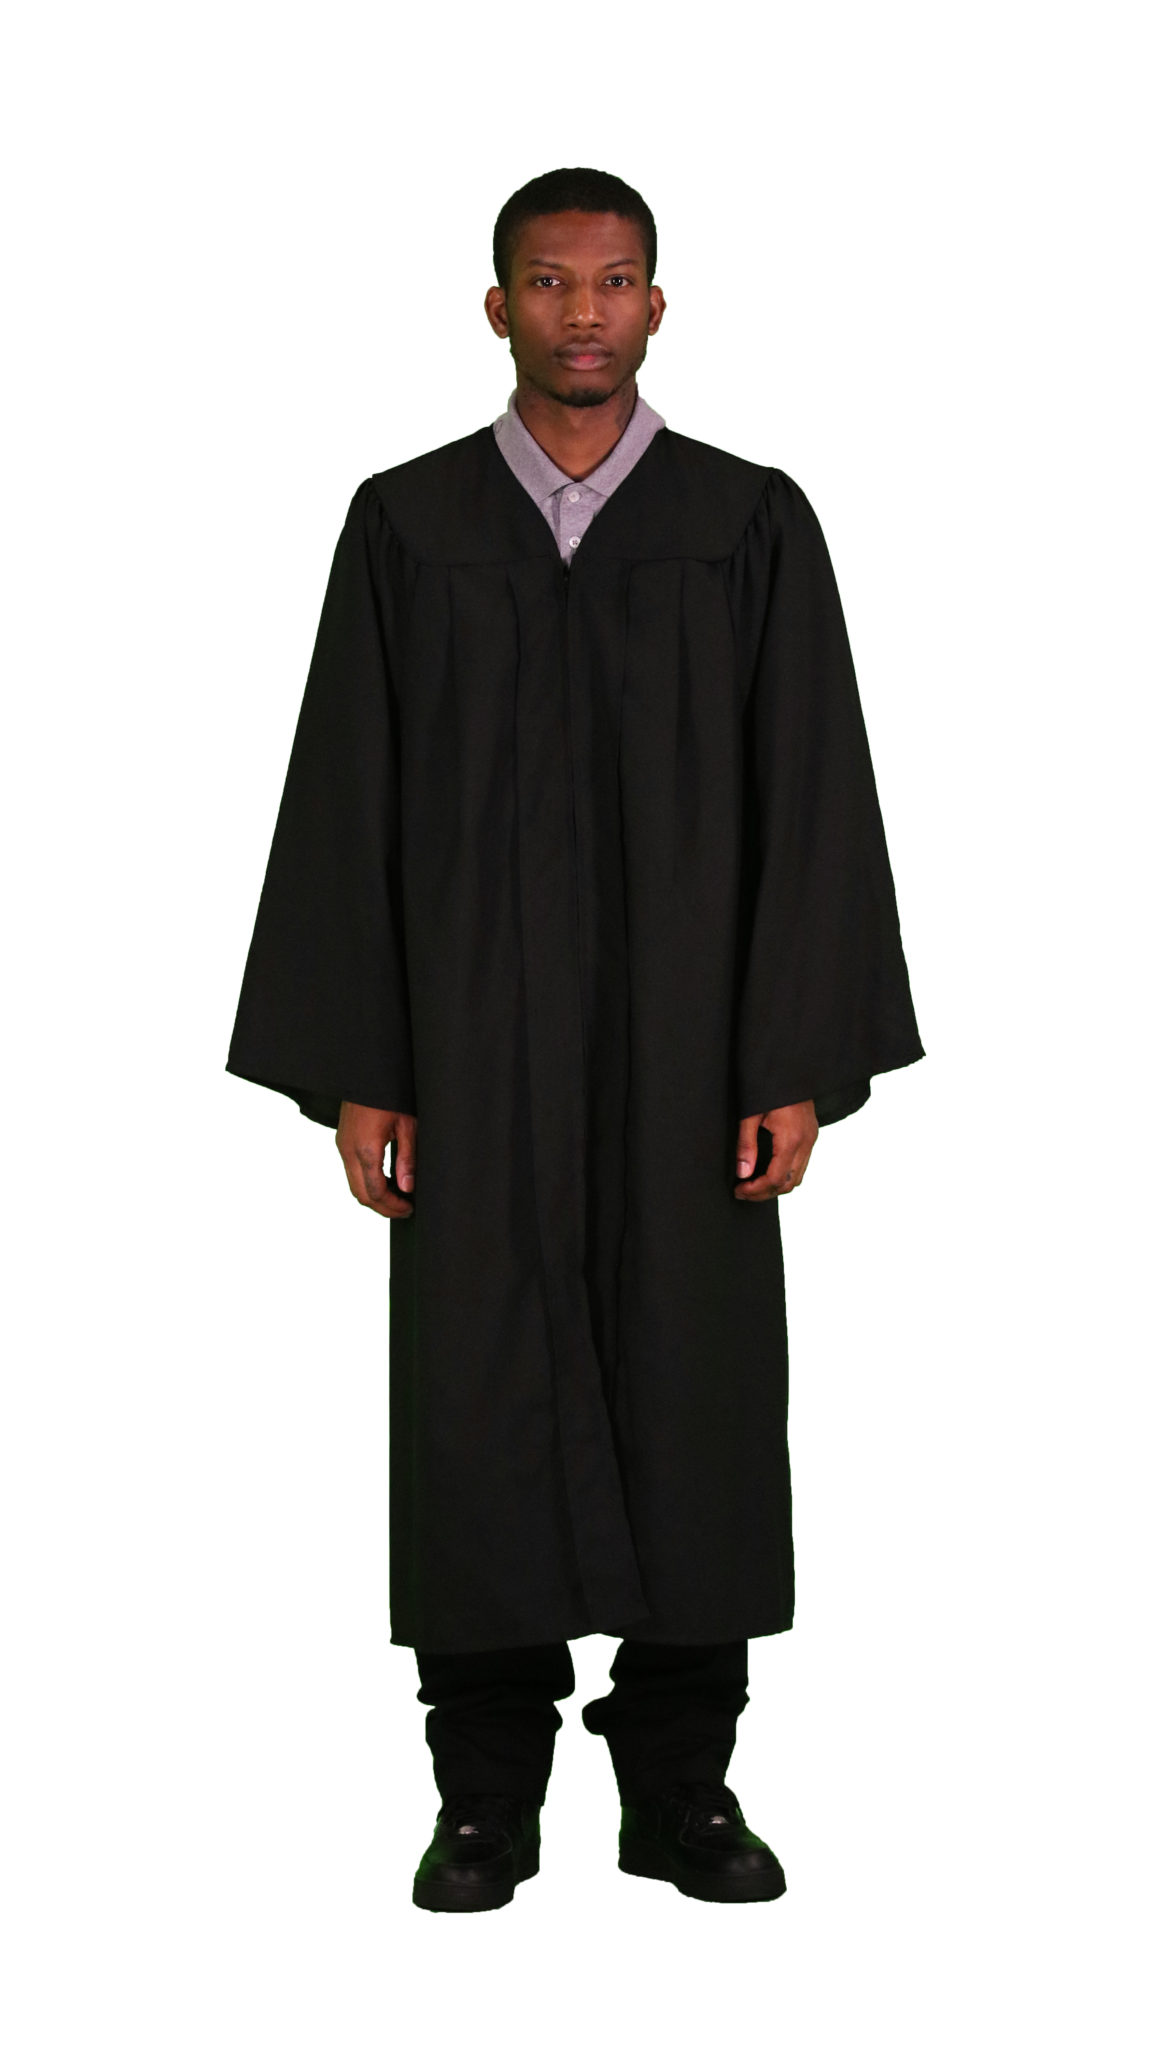 Graduation Costume Rentals